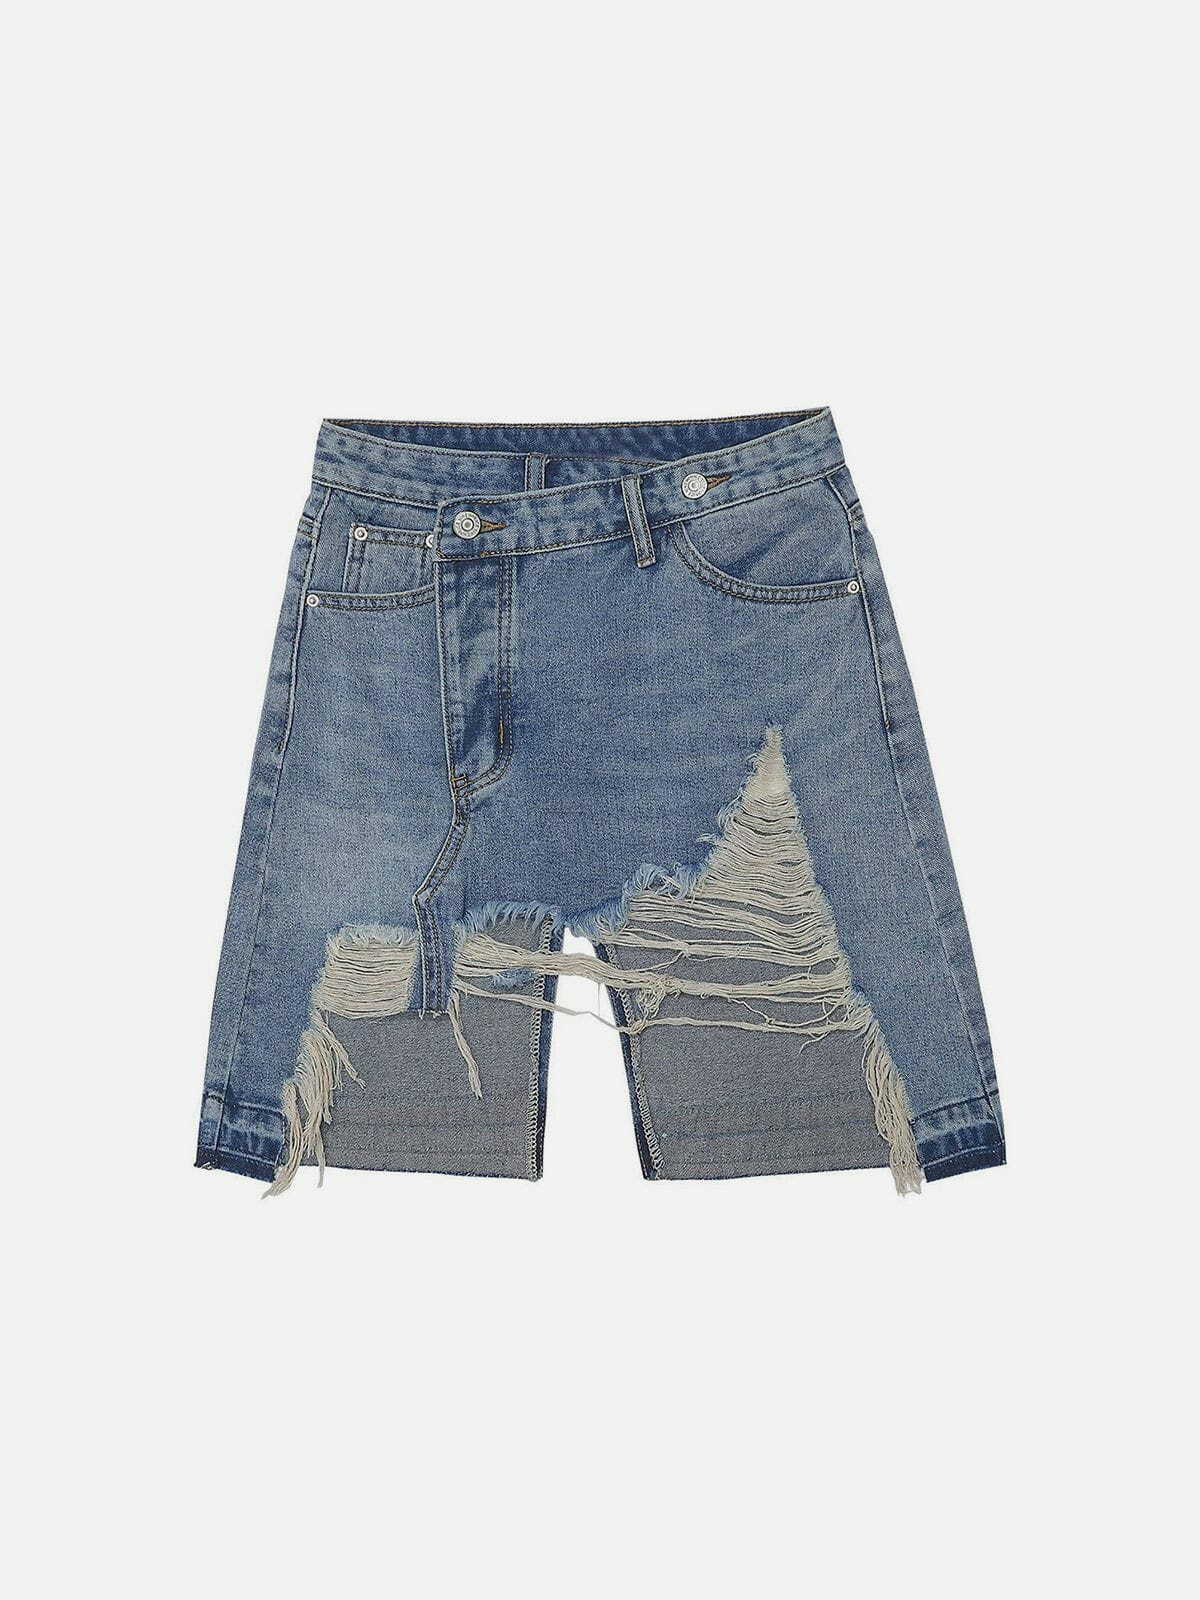 distressed slim fit denim shorts urban edge & vintage charm 6921